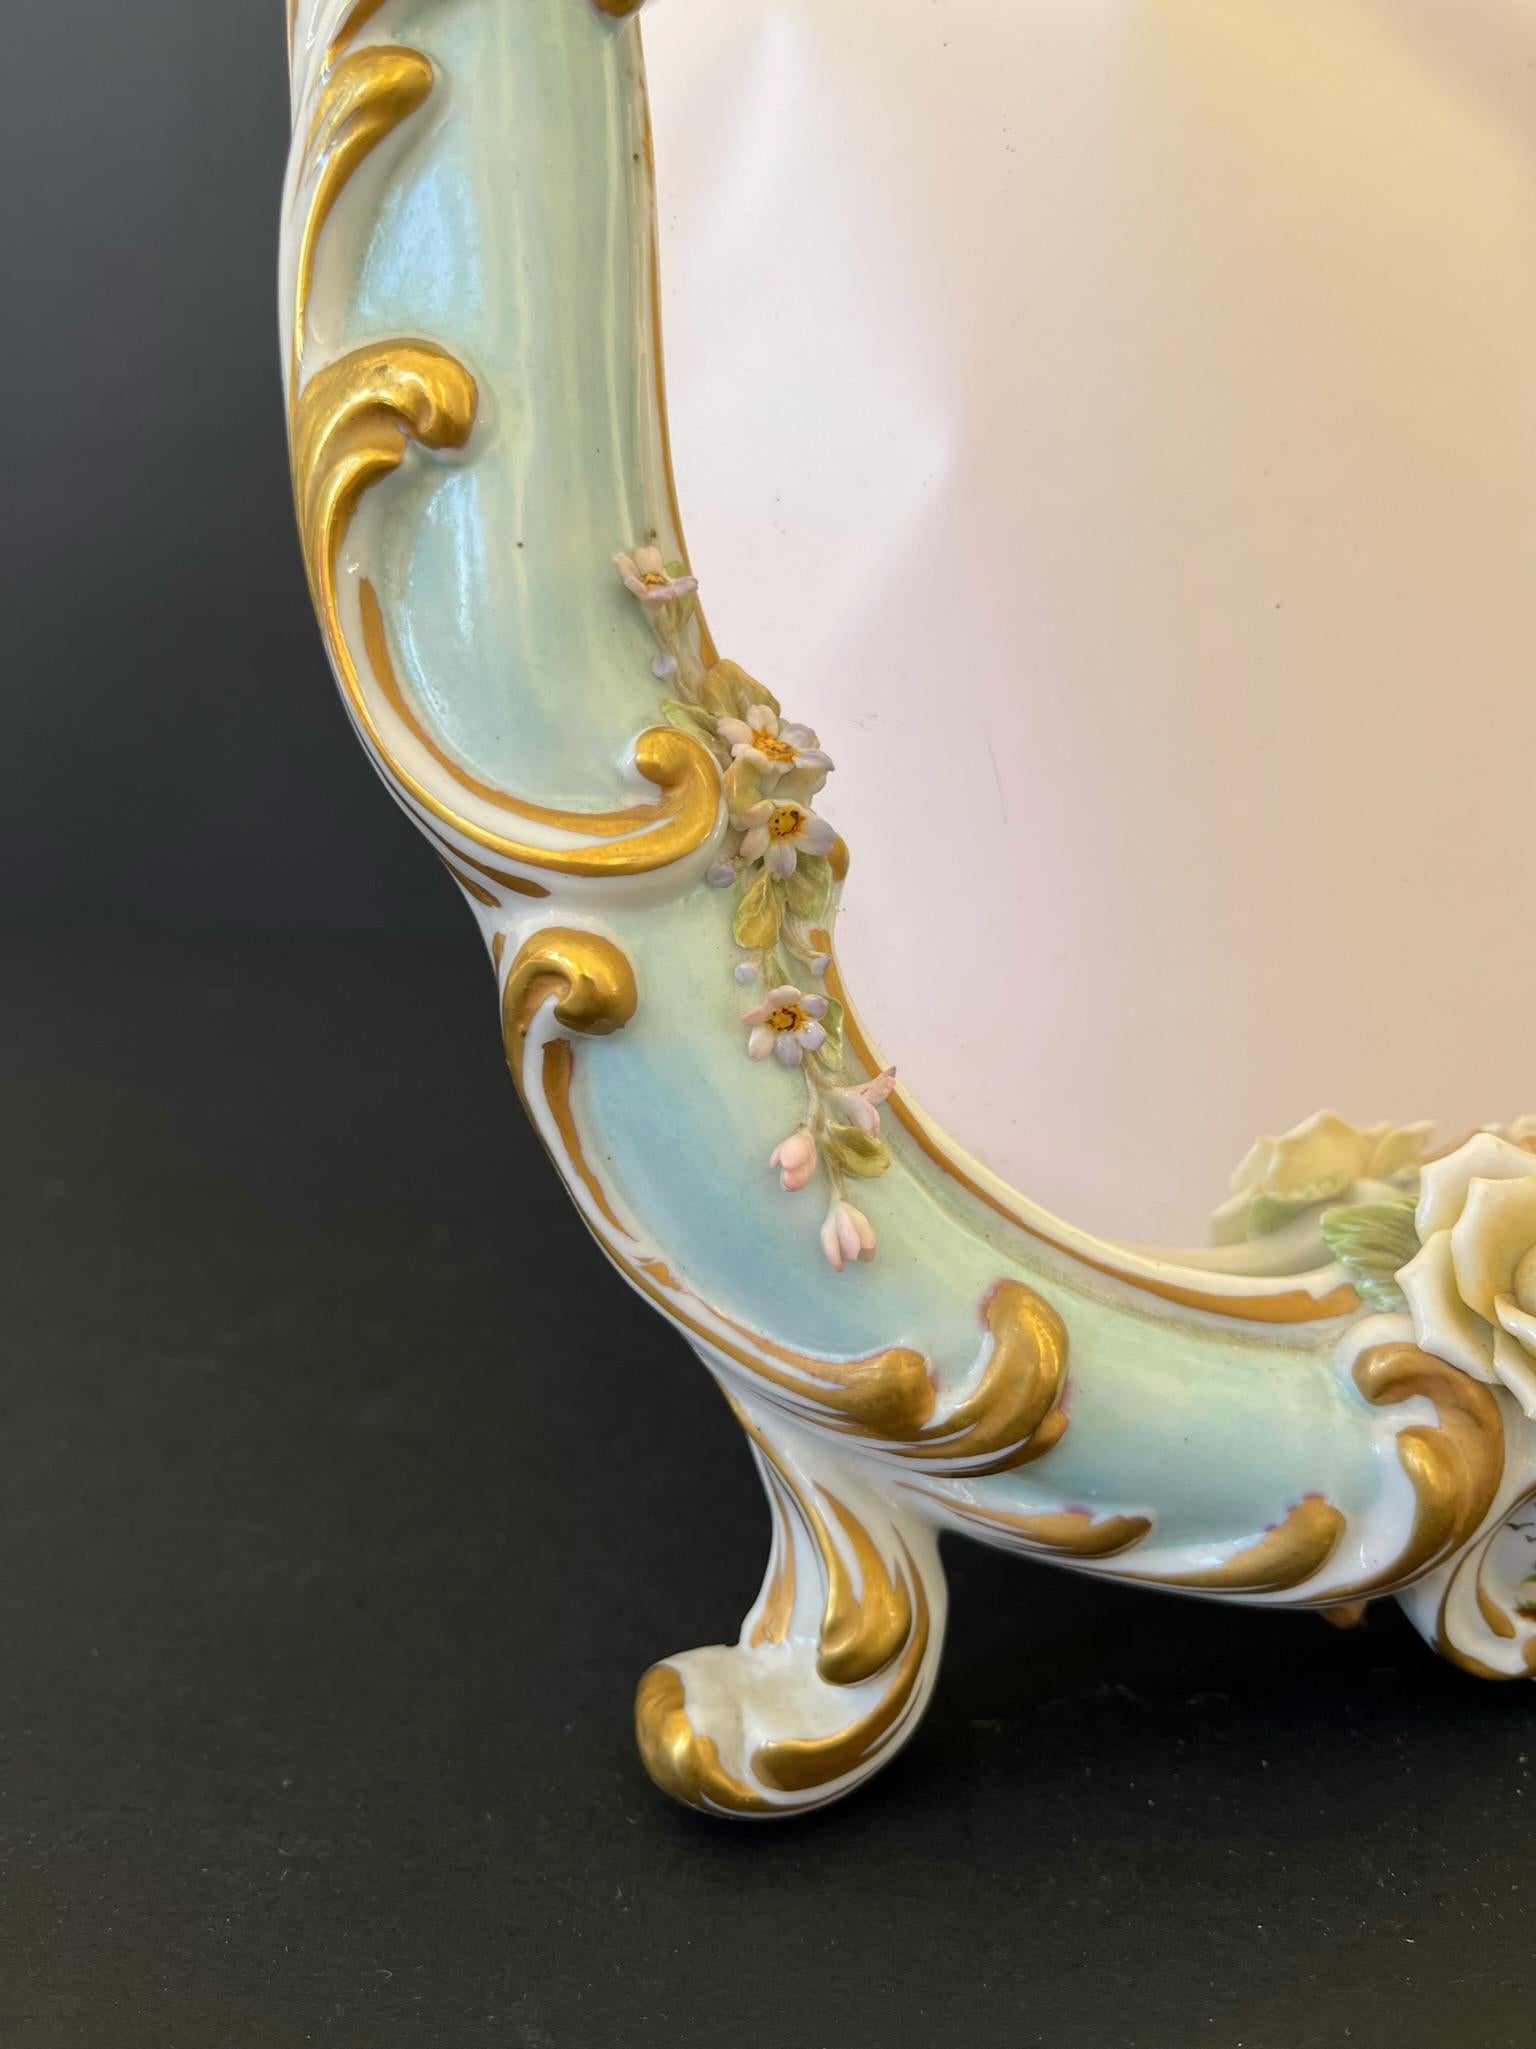 how to identify capodimonte porcelain